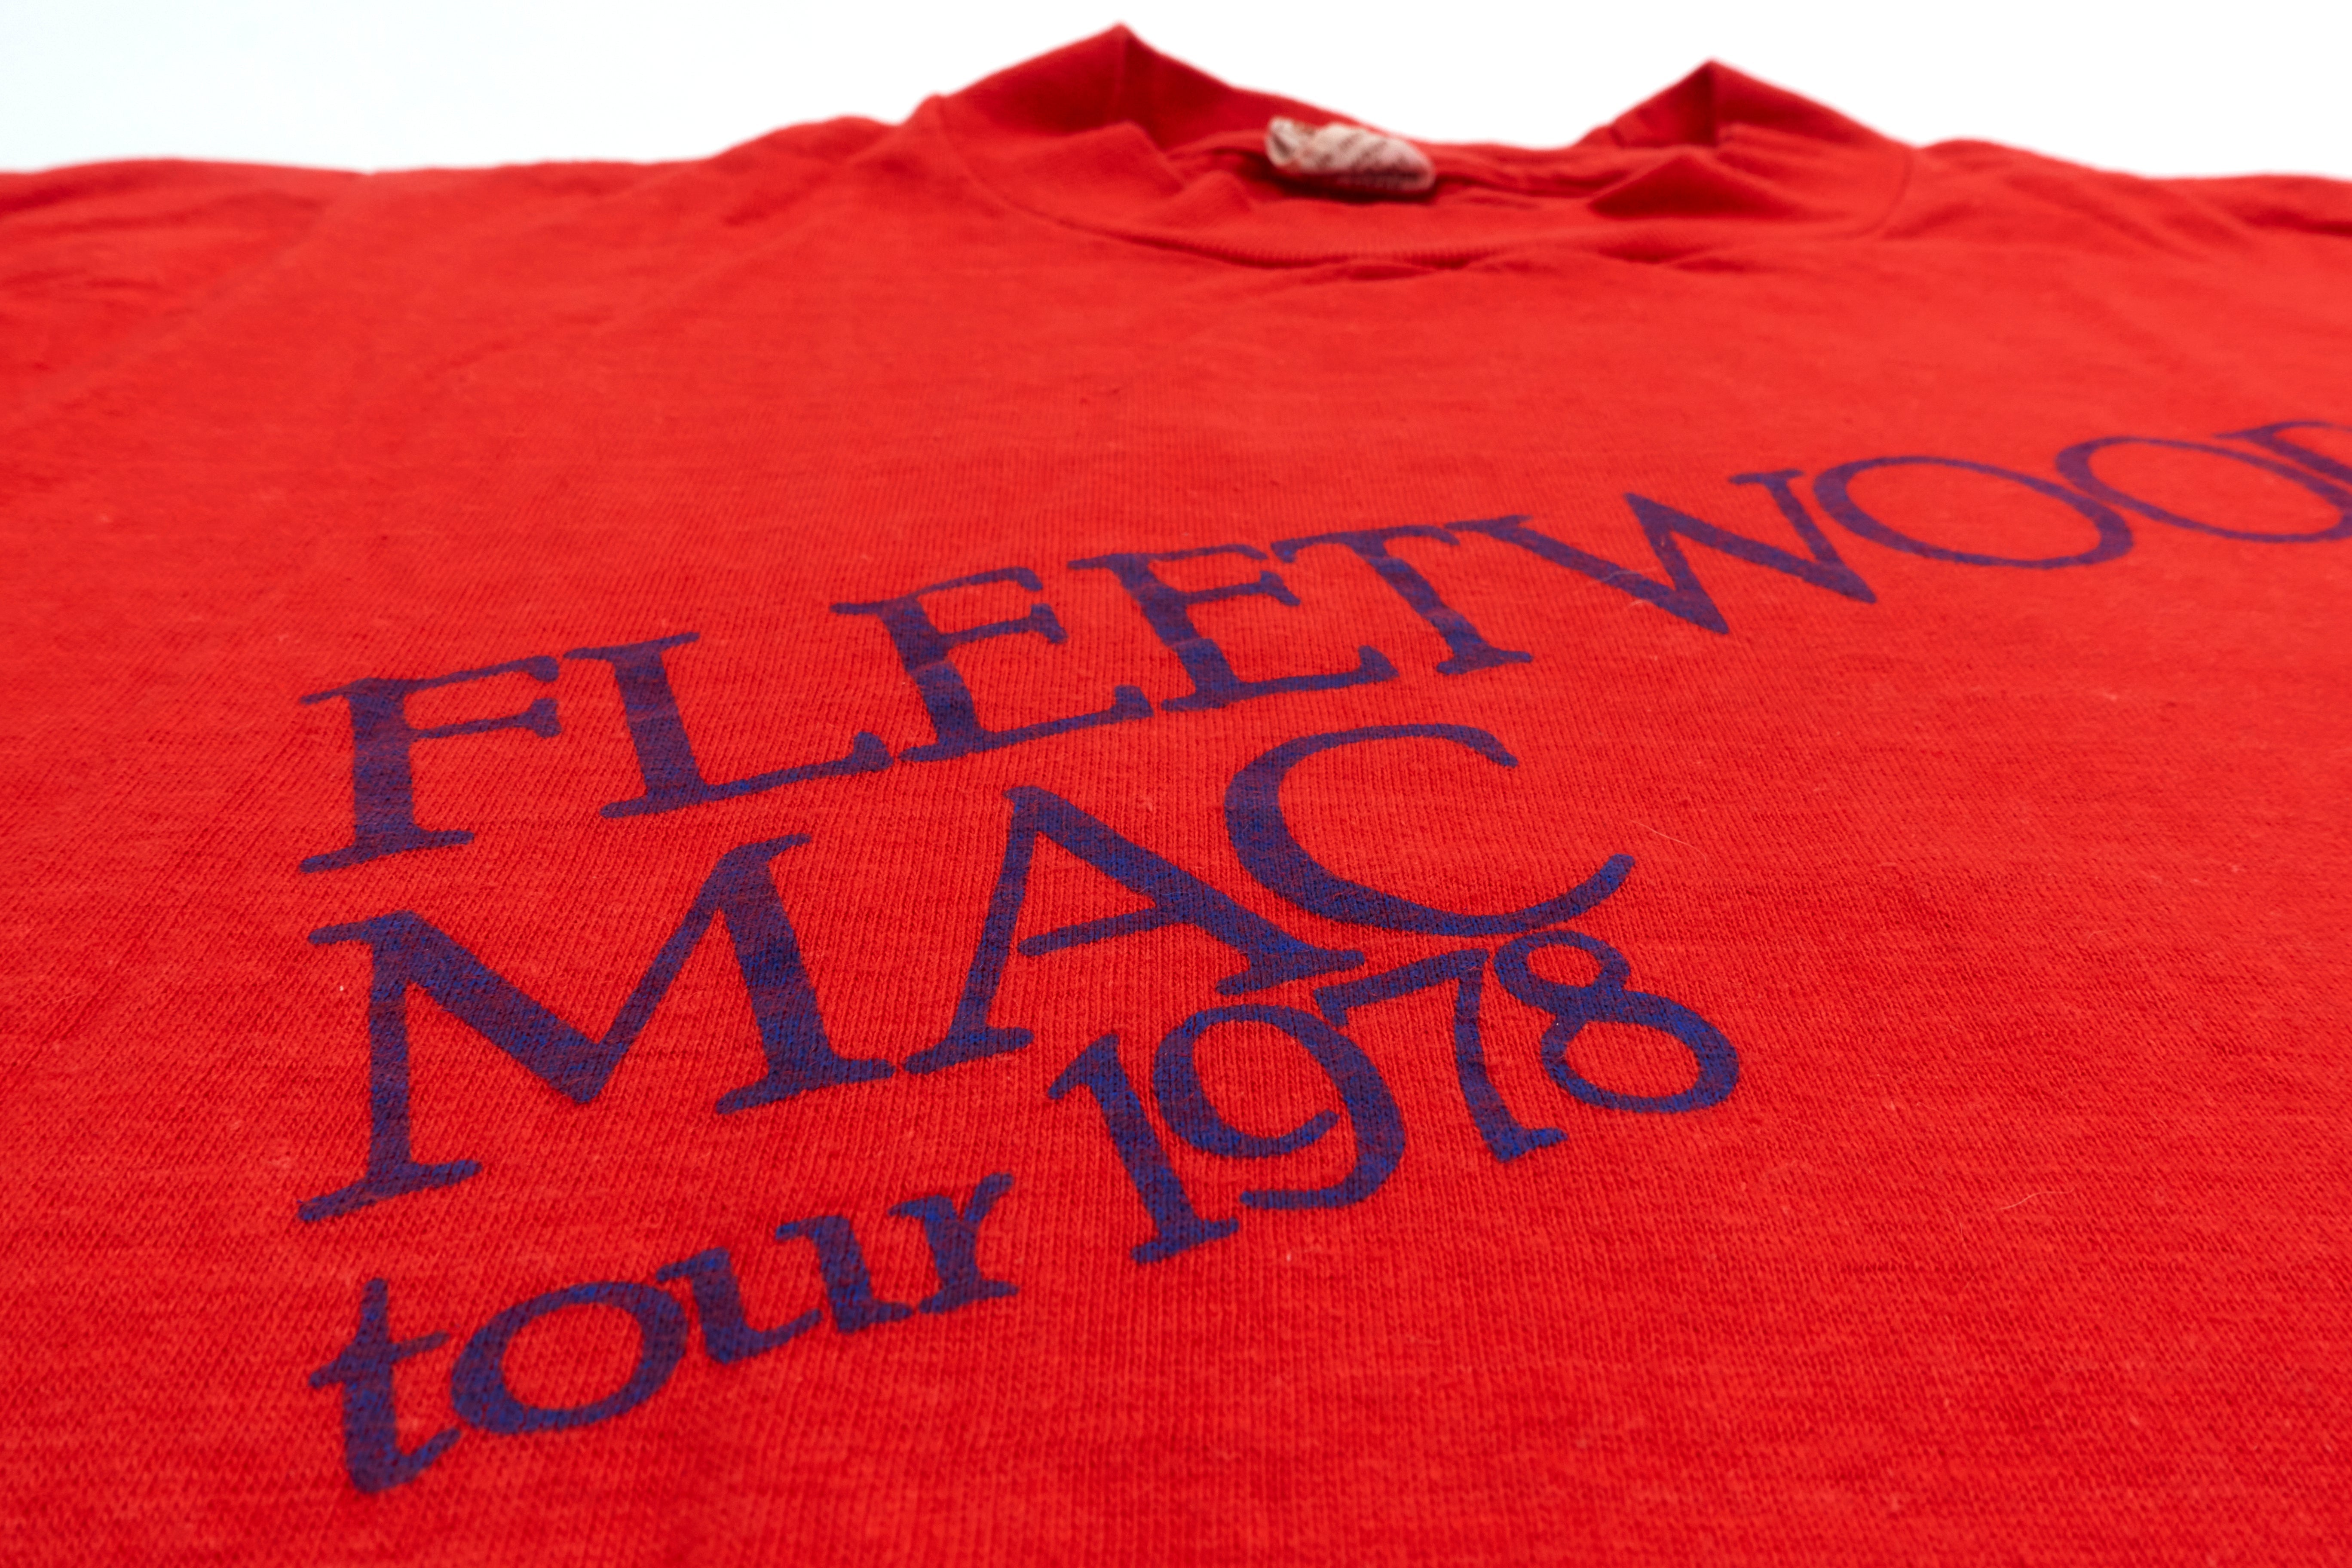 Fleetwood Mac – Rumours 1978 Tour Shirt Size Medium